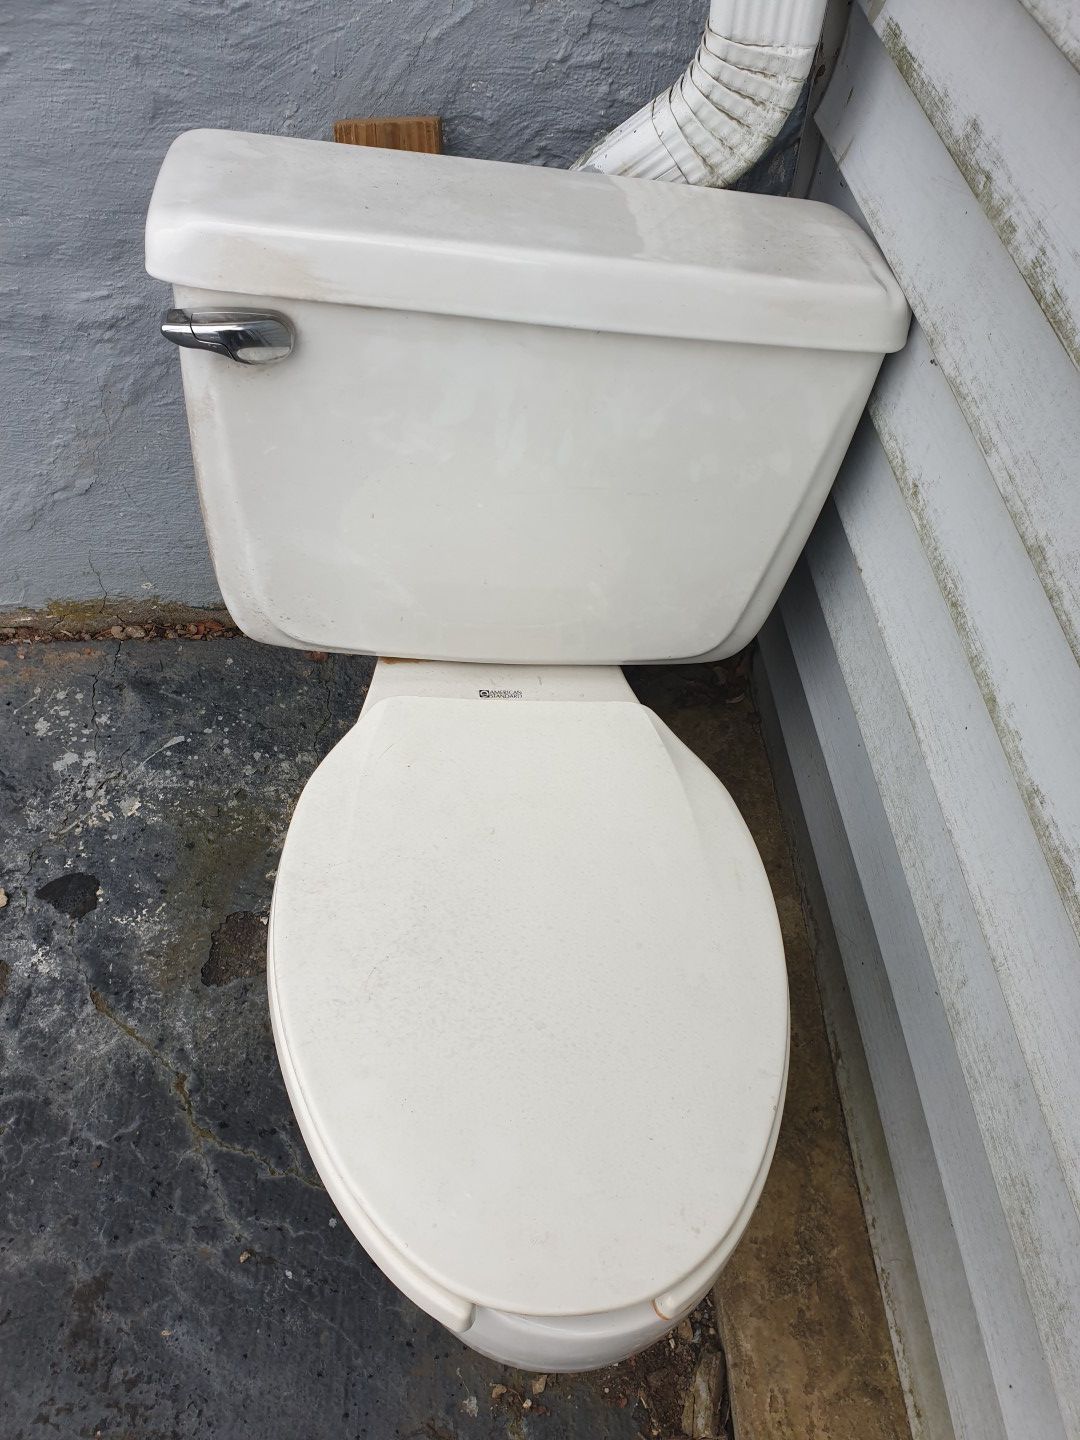 Free elongated toilet.